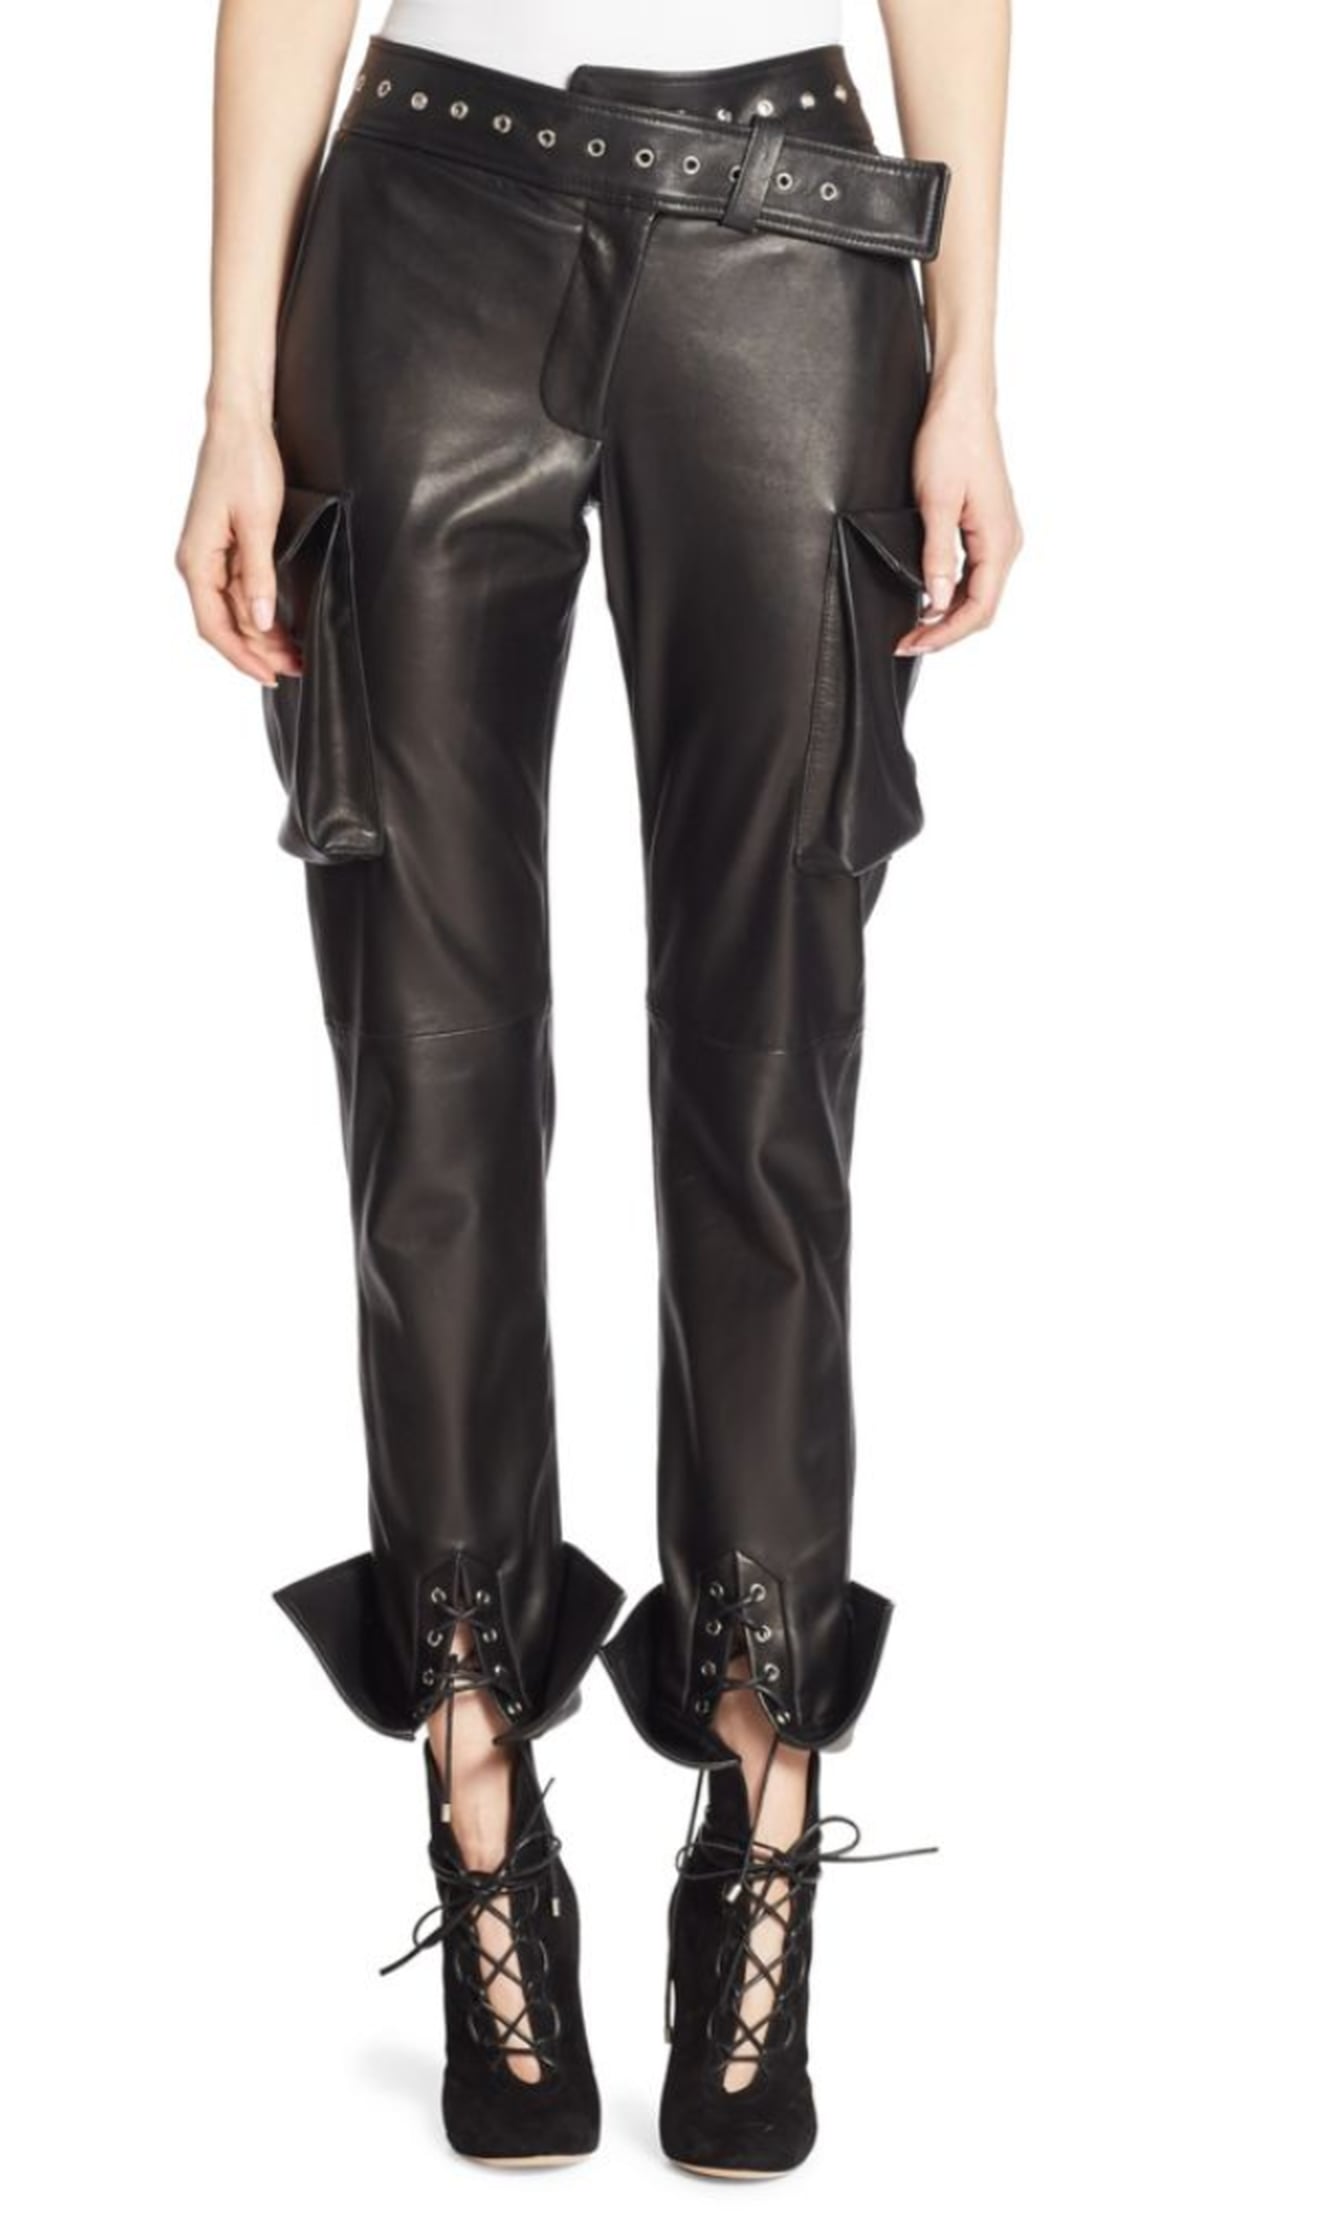 Selena Gomez Versace Leather Outfit Billboard Music Awards | POPSUGAR ...